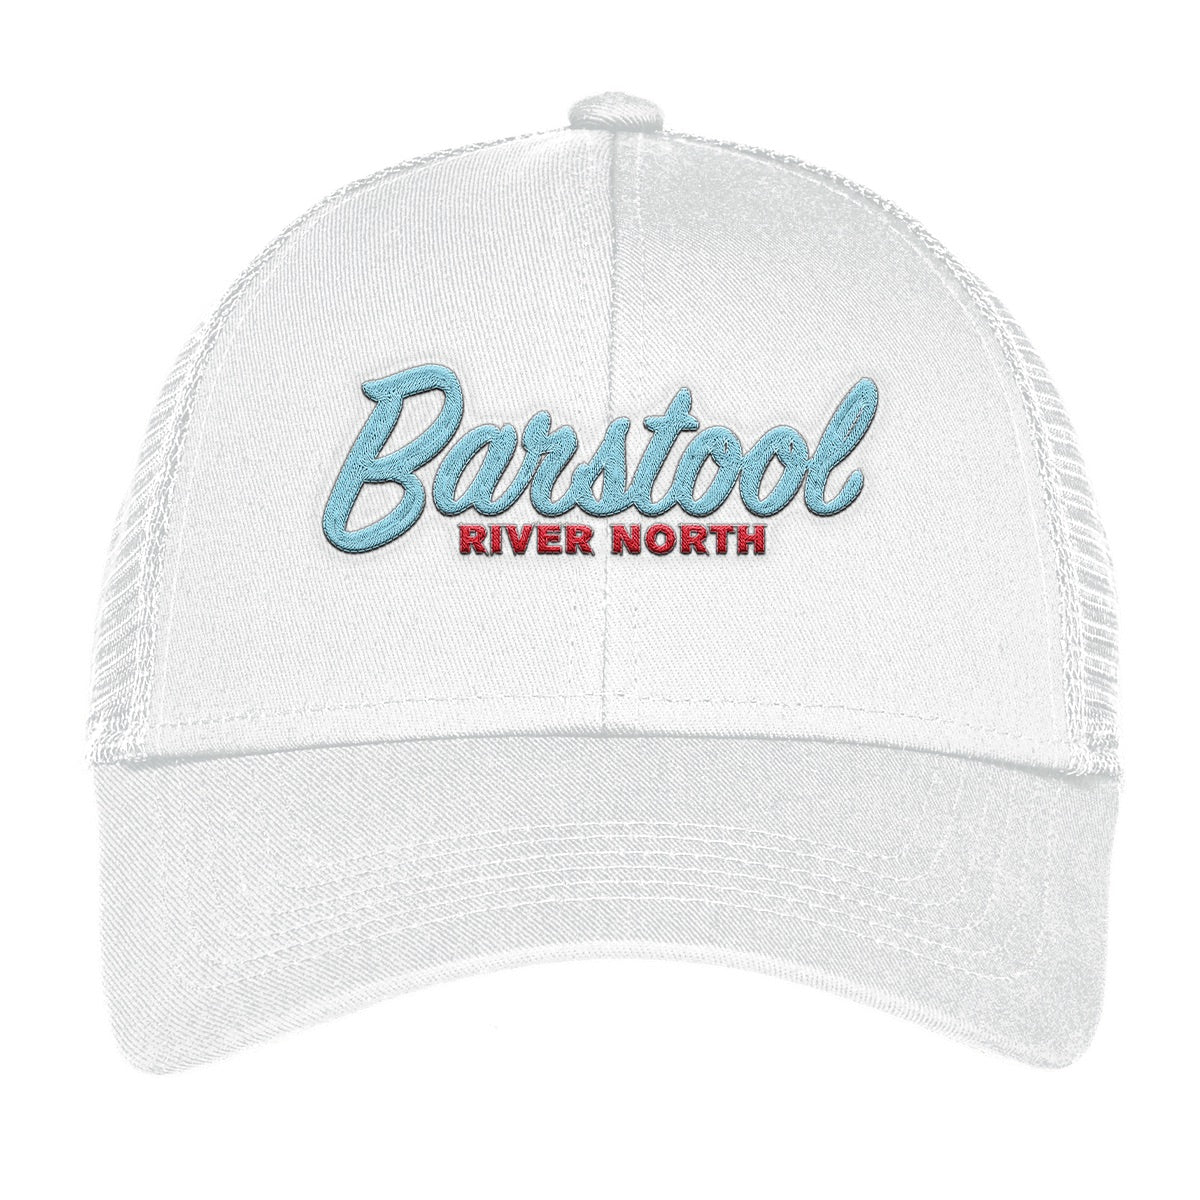 Barstool River North Trucker Hat-Hats-Barstool Sports-White-One Size-Barstool Sports